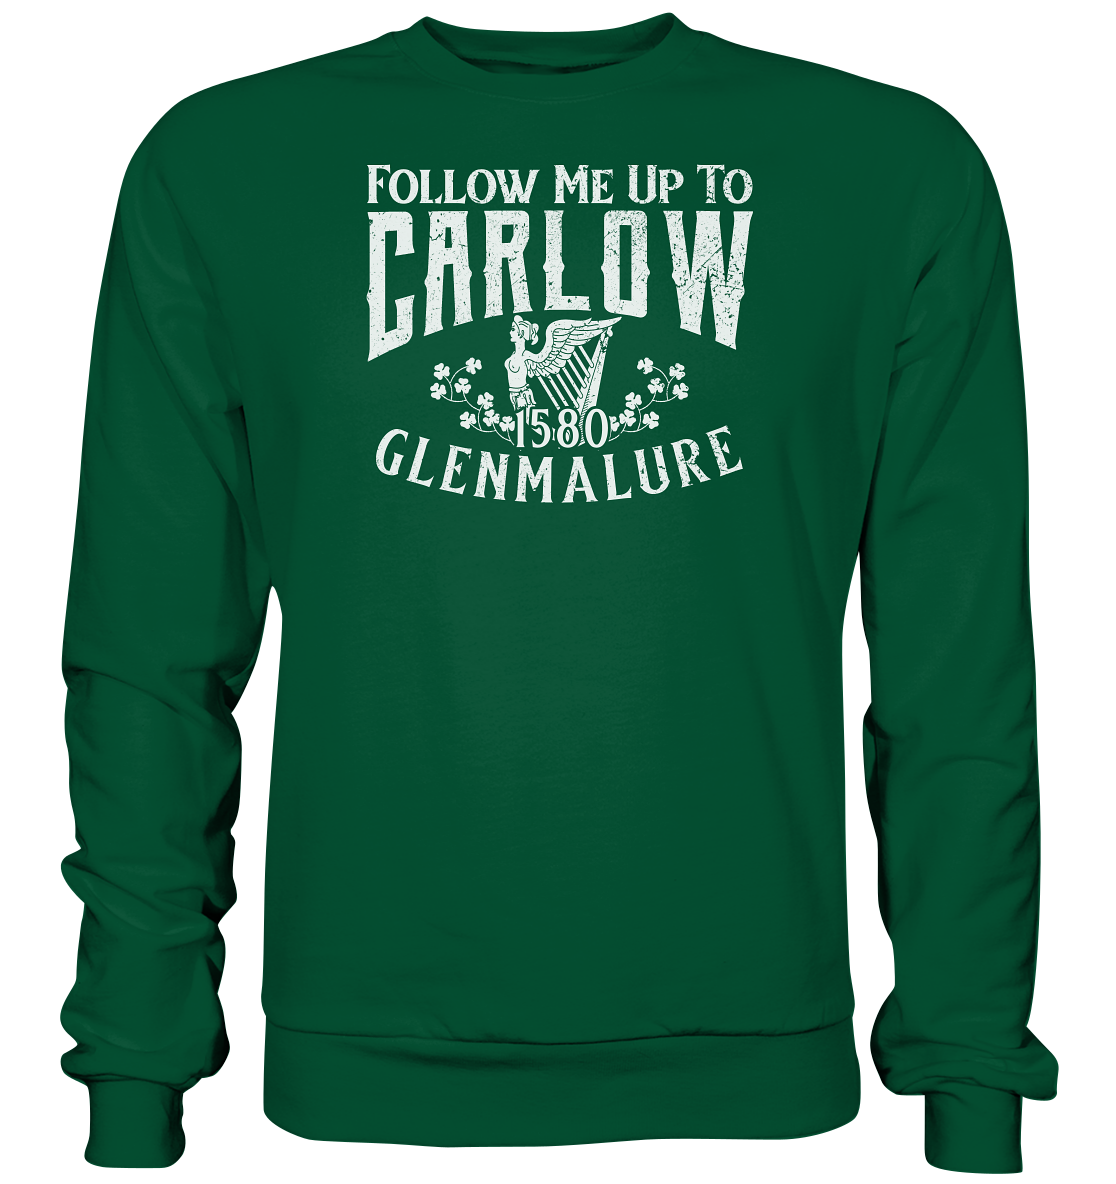 Follow Me Up To Carlow - Basic Sweatshirt